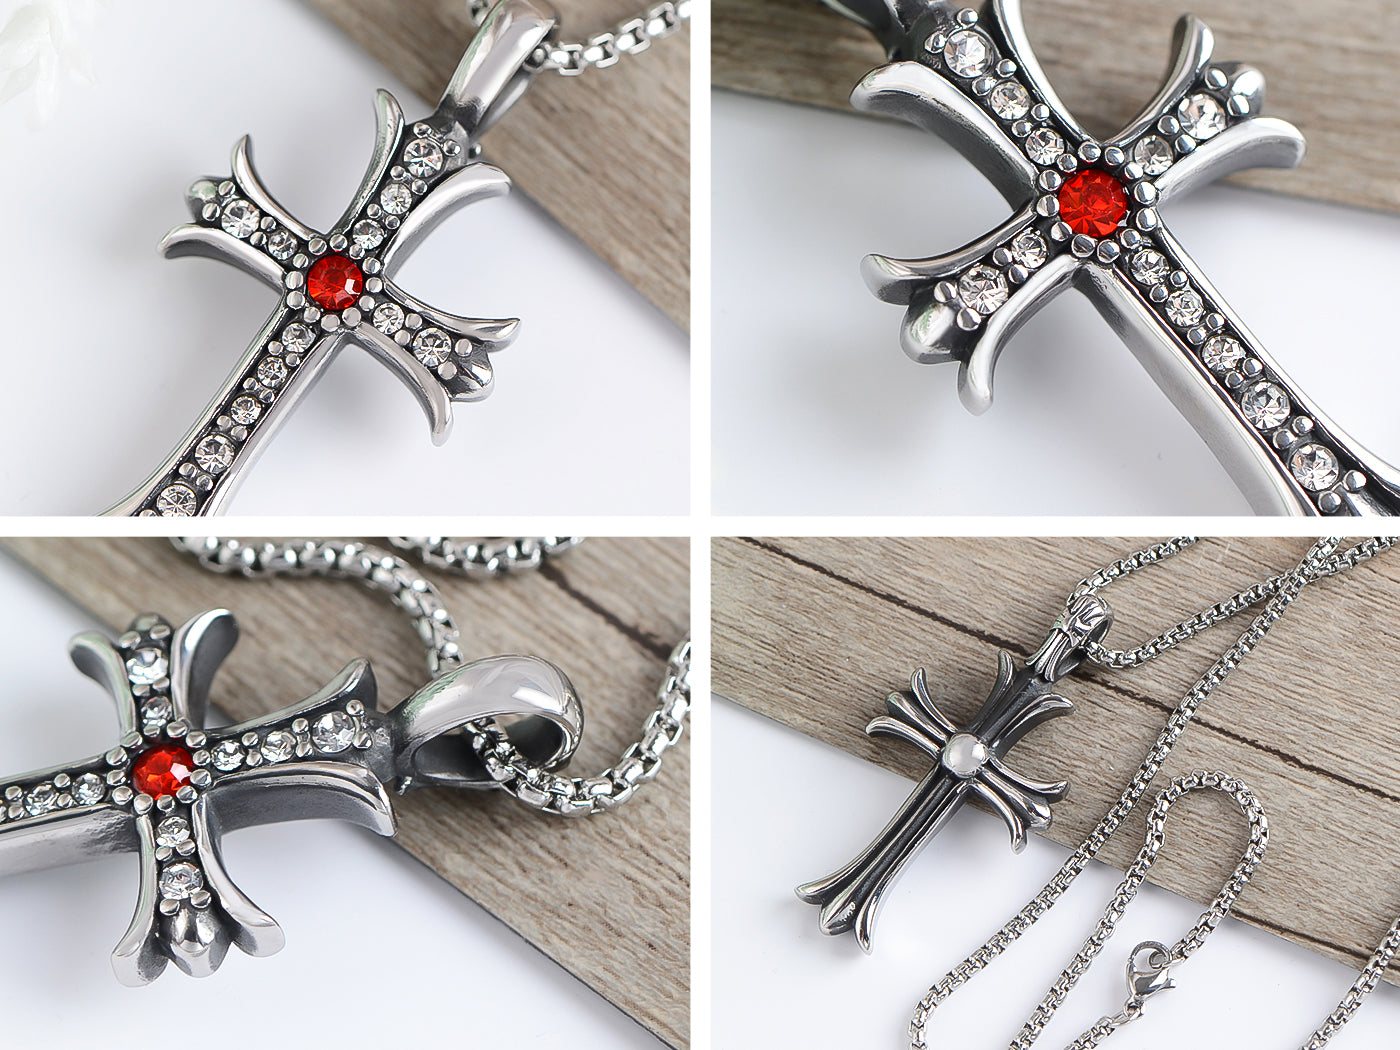 Vintage Reproduct Cross Necklace Pendant